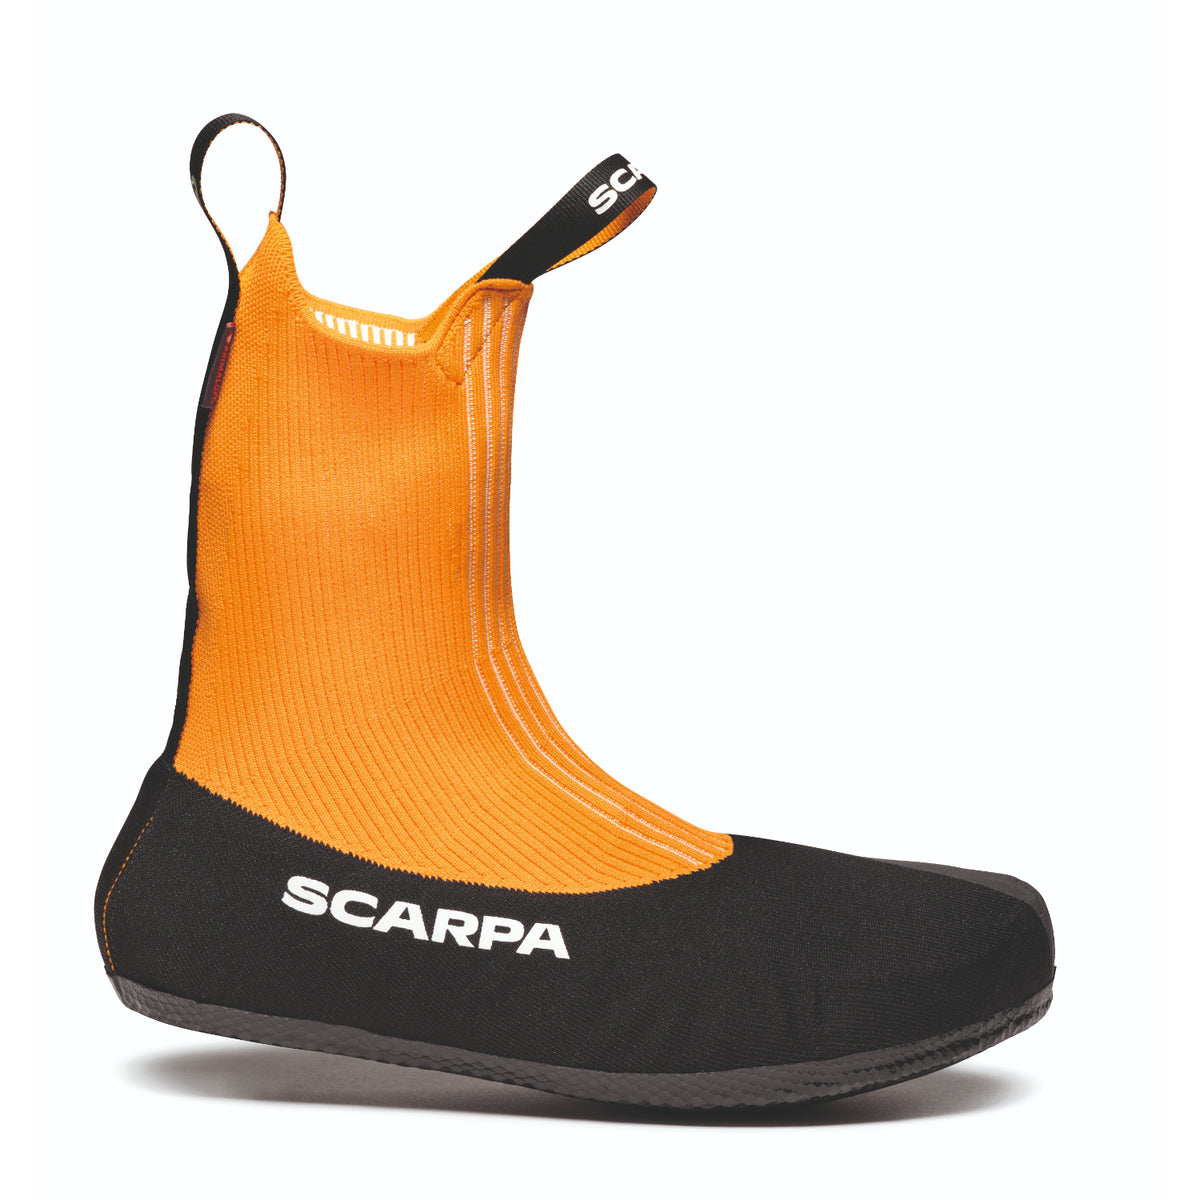 Scarpa Phantom 6000 HD mountaineering boot, inner booty